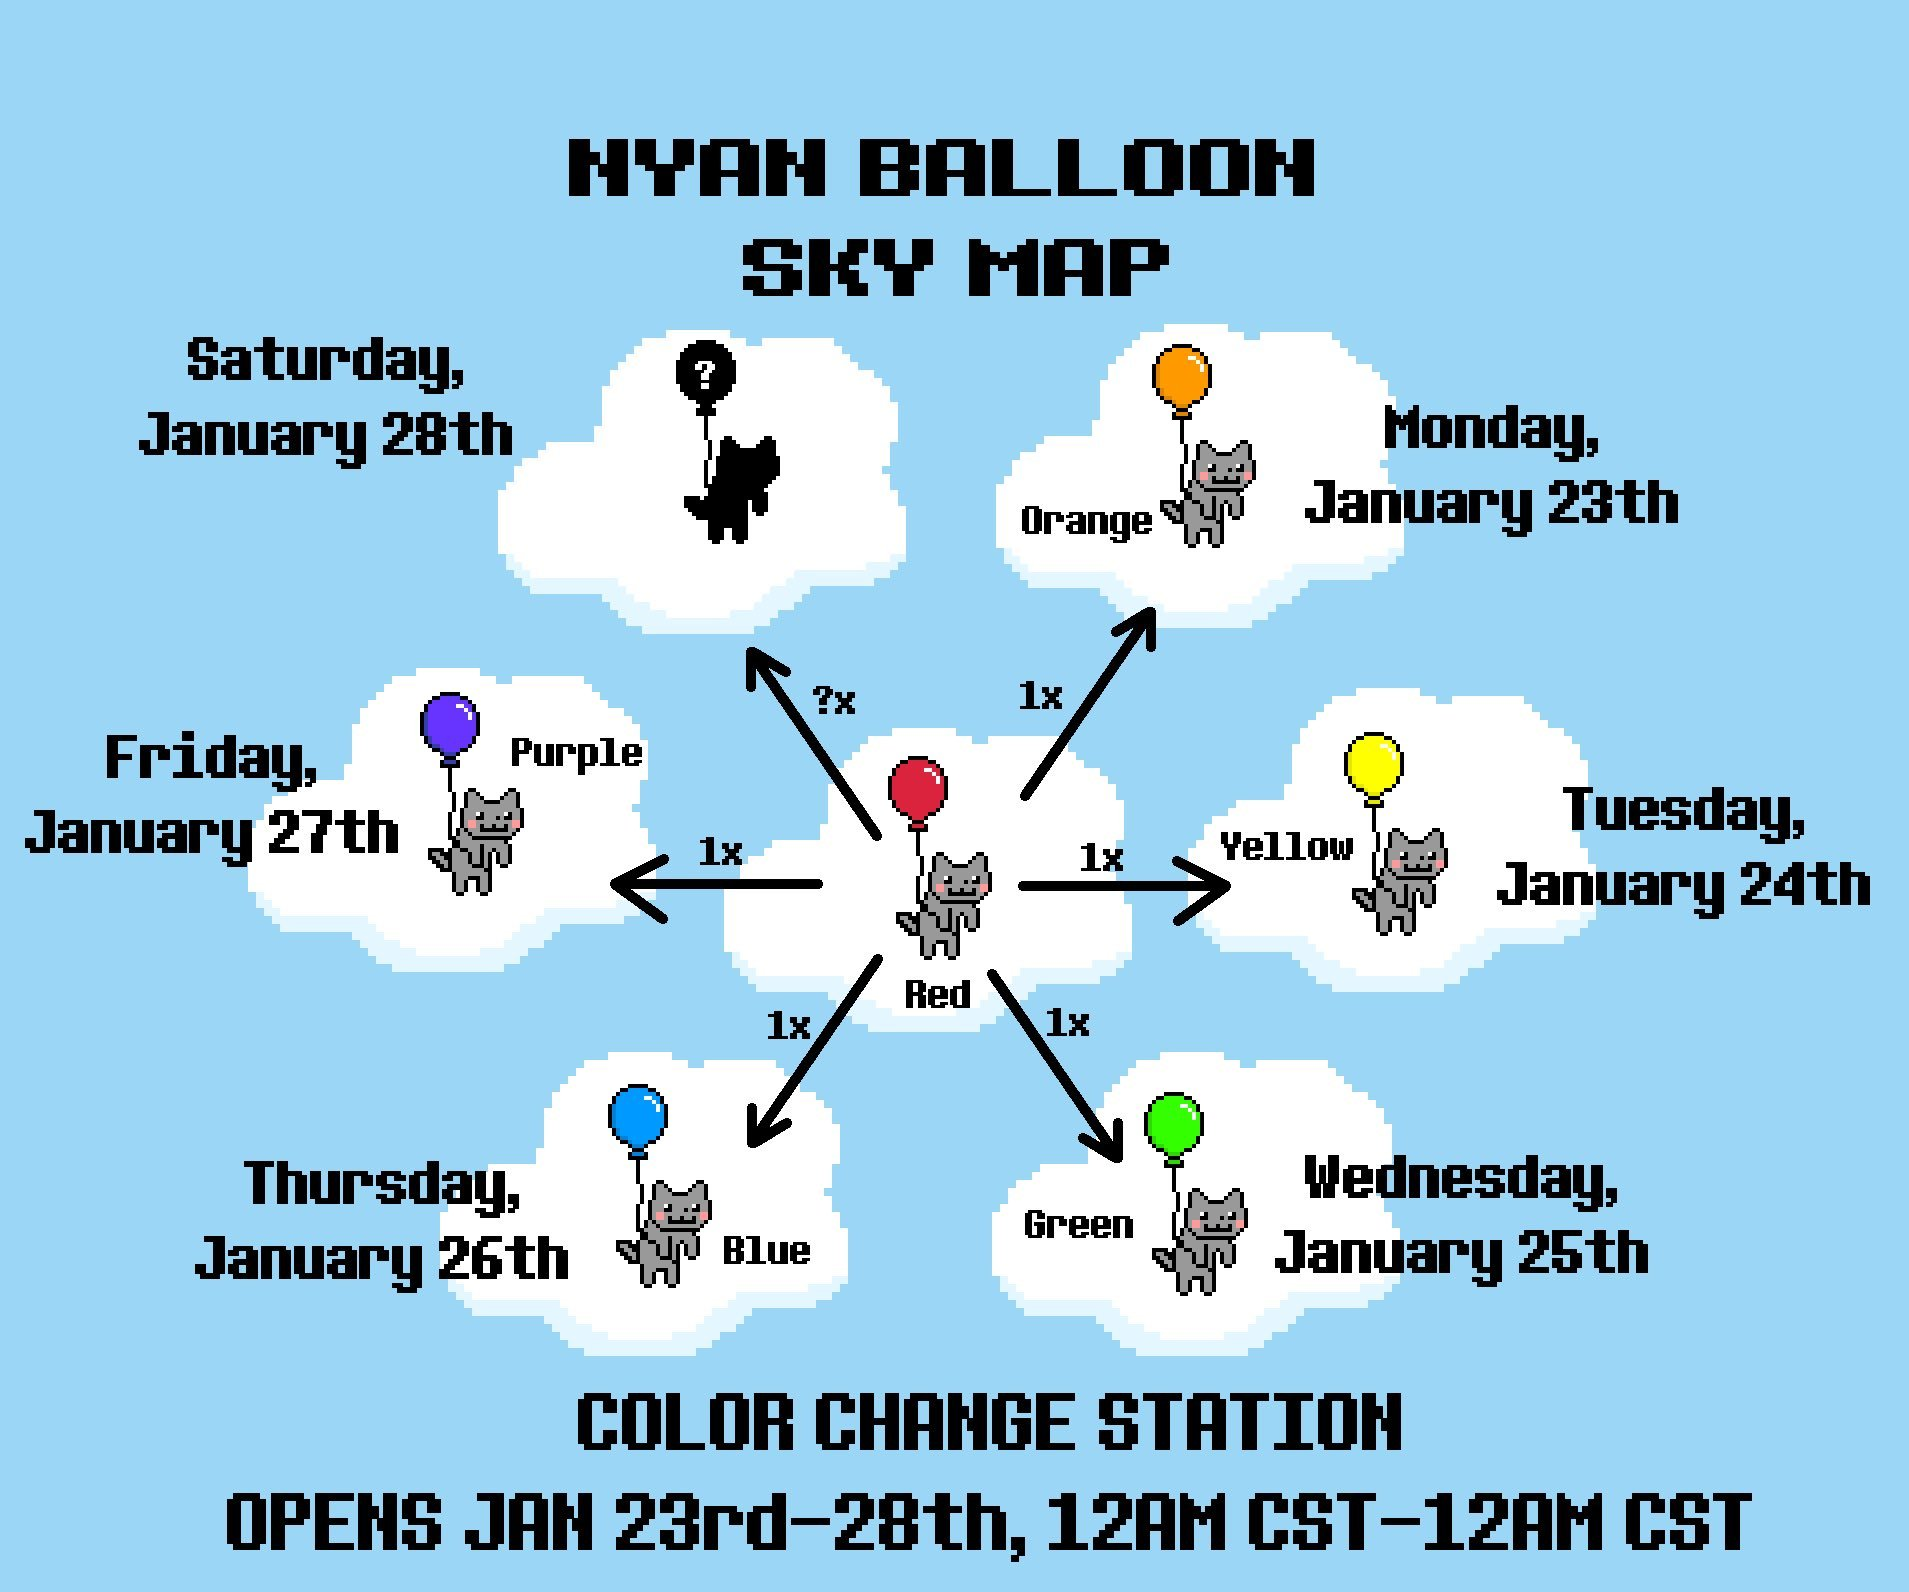 Chris's Nyan Balloon Skymap with 6 Days of Burn Events